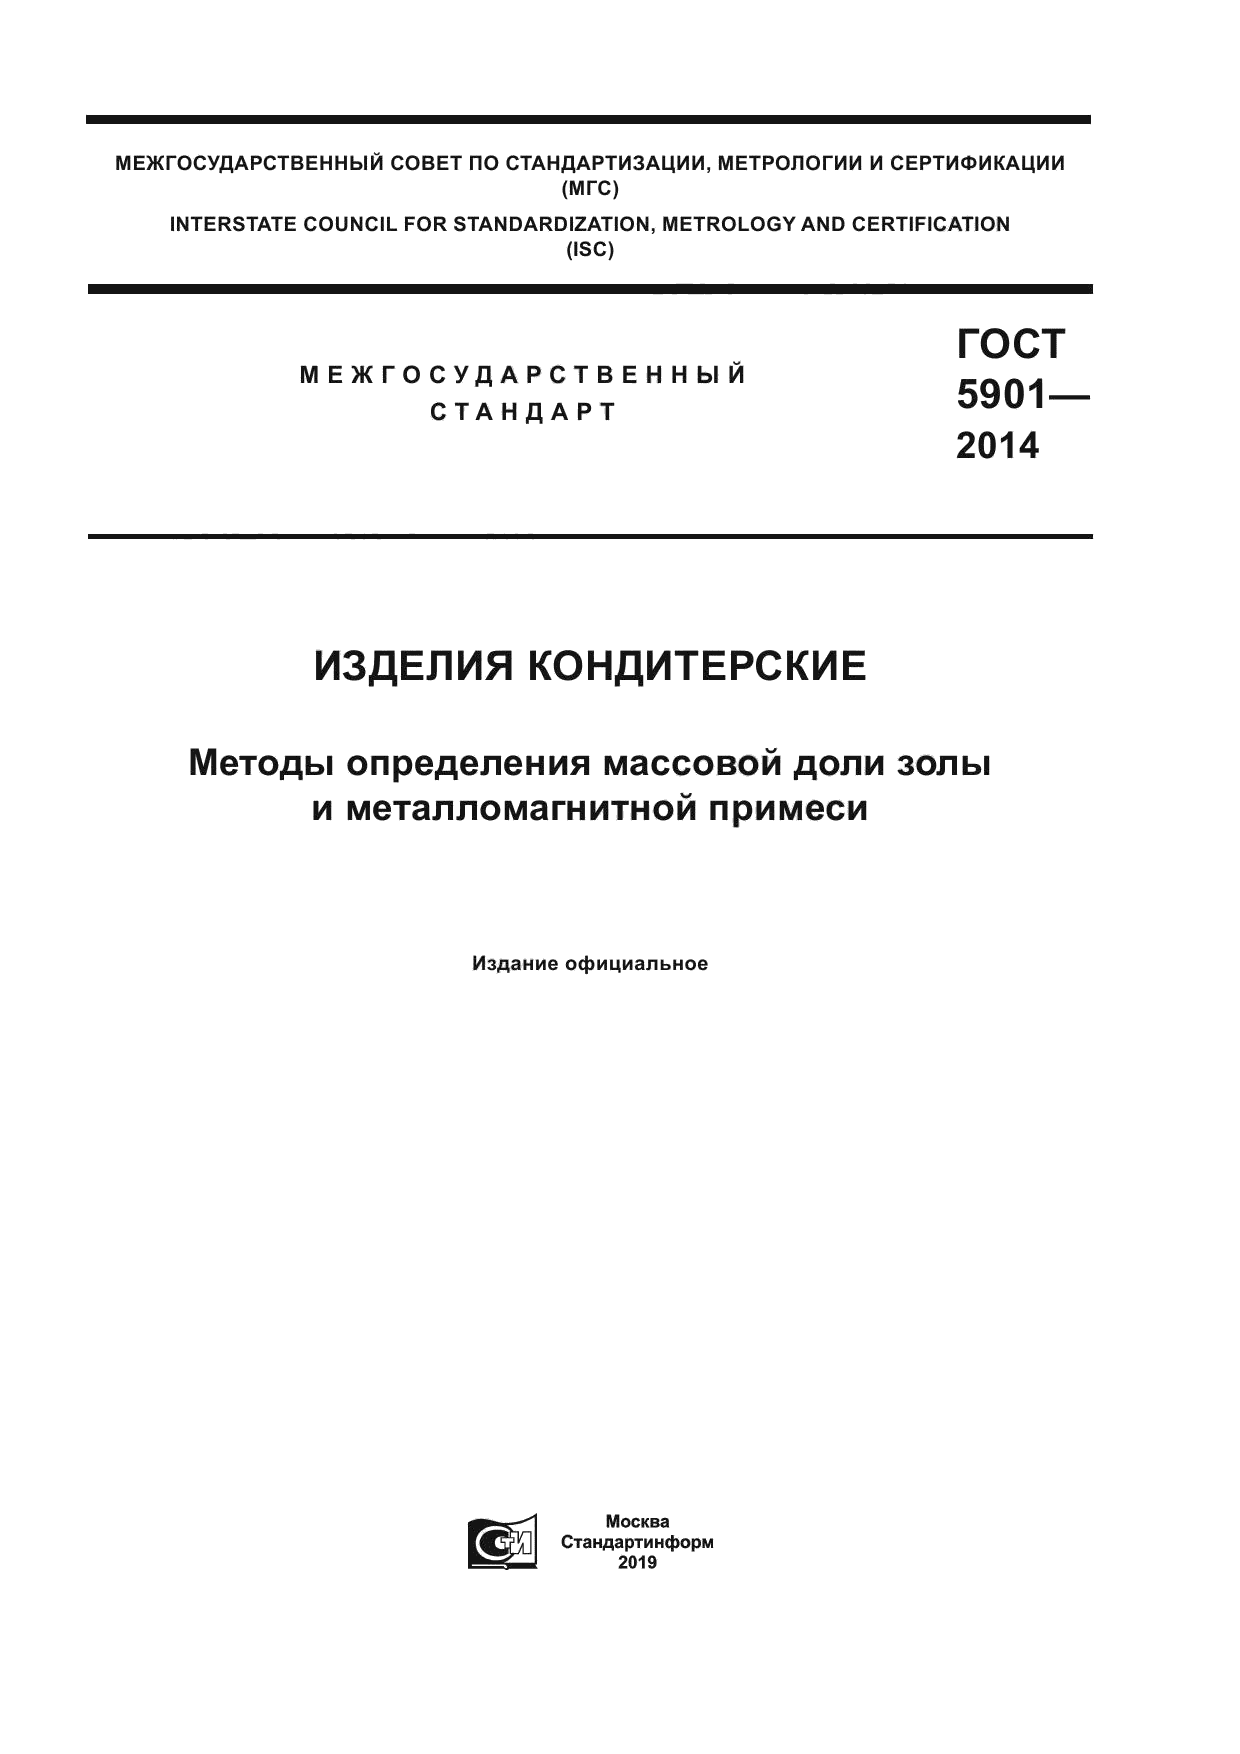 ГОСТ 5901-2014